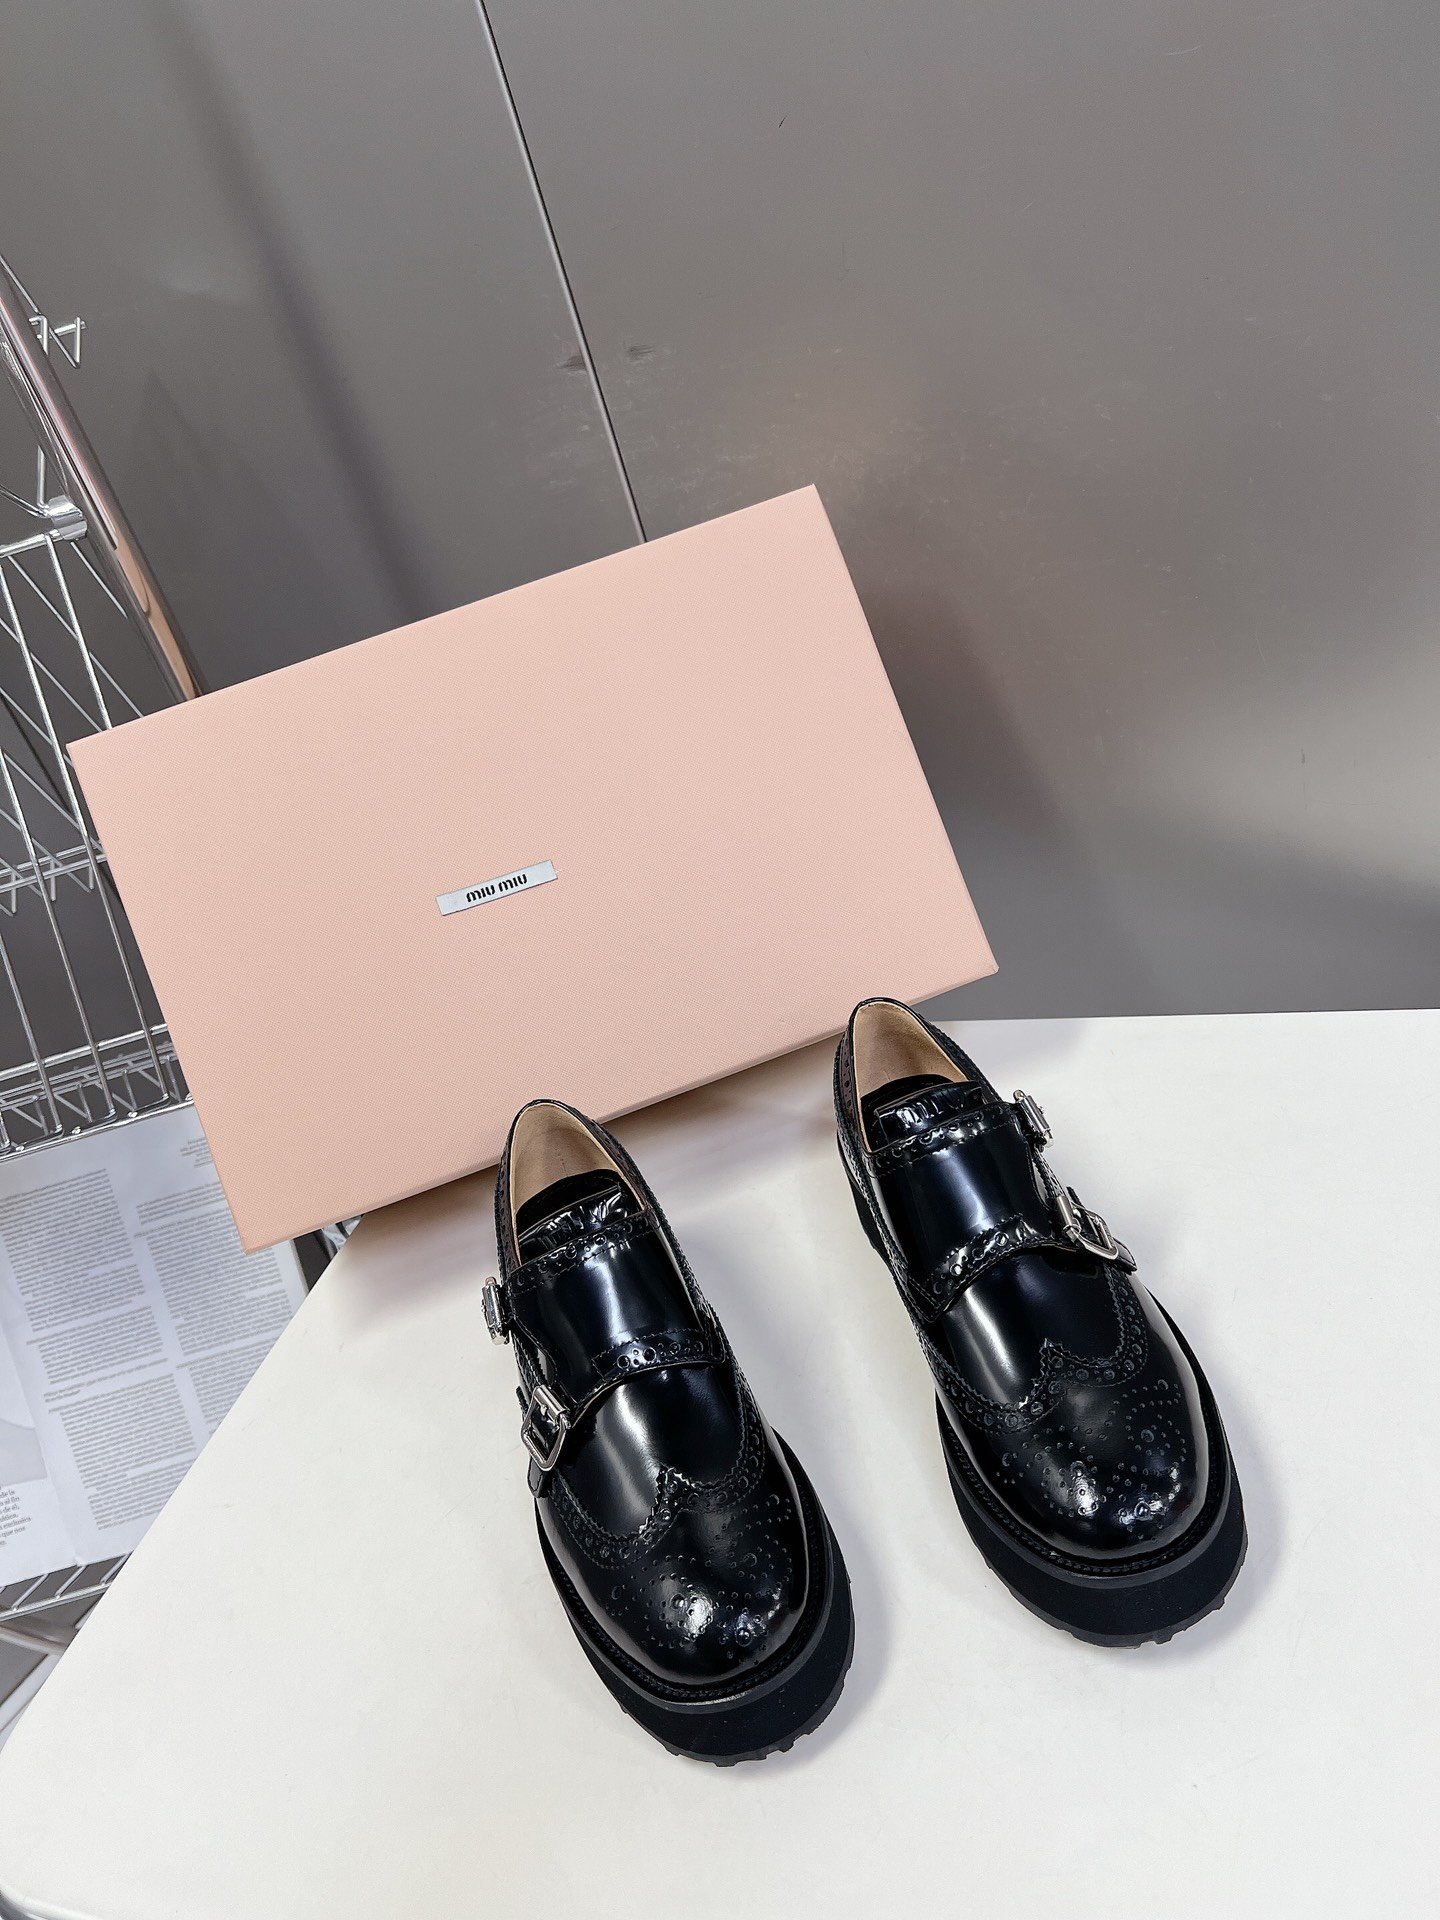 MiuMiu谬谬宣布携手鞋履品牌Churchs呈现春夏合作系列将品牌传统的正装风范与MiuMiu品牌蕴藉